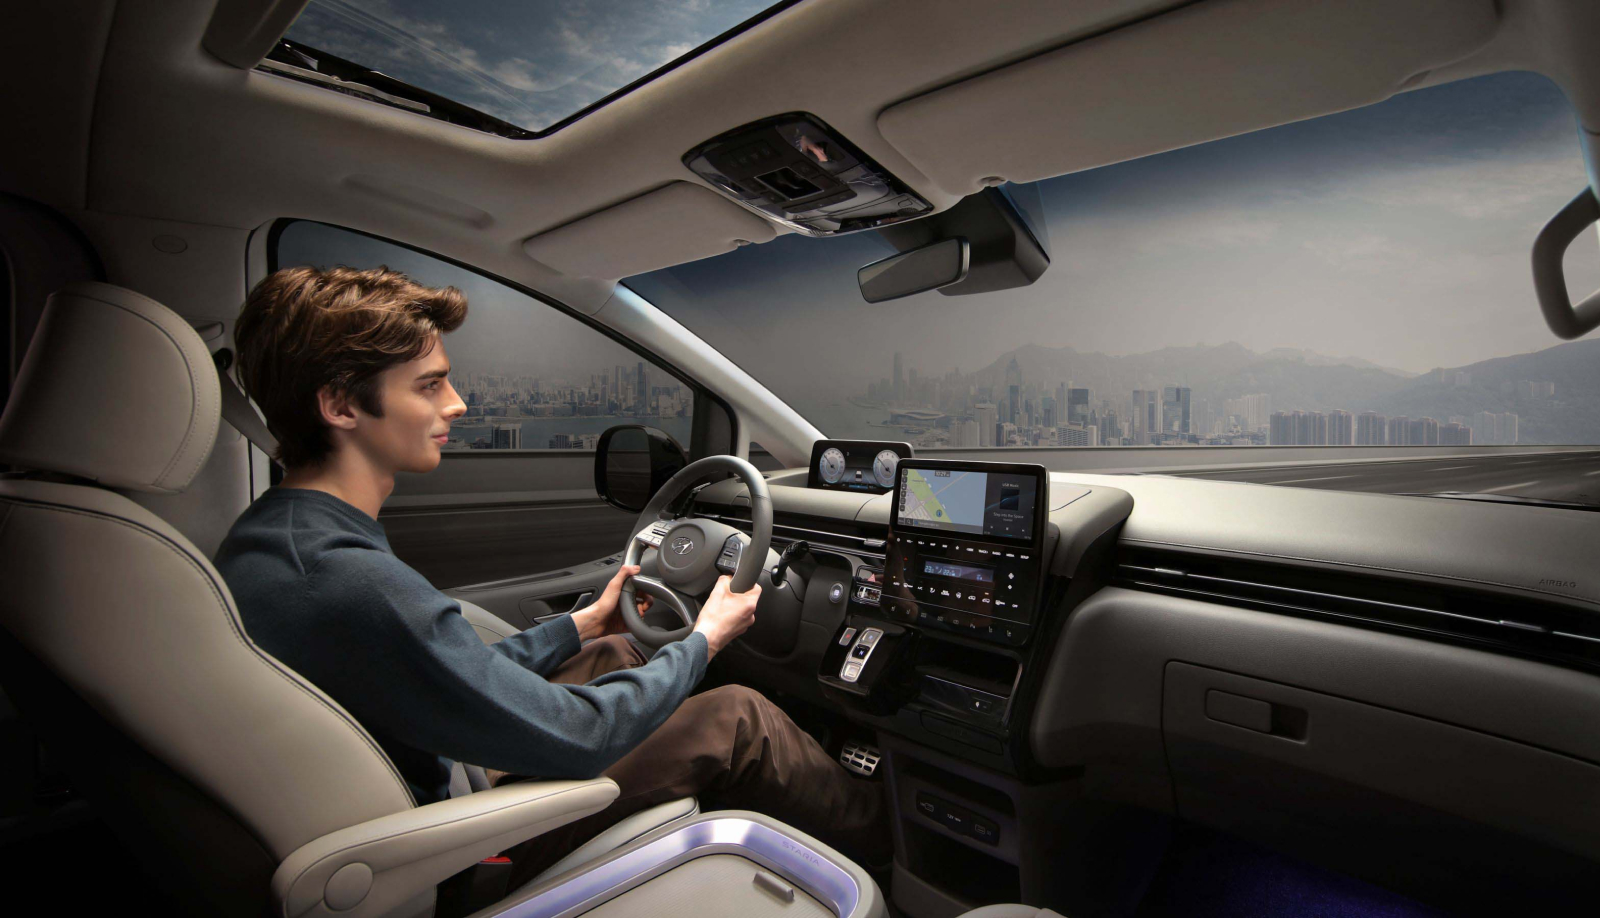 Design sketch of the all-new Hyundai Tucson compact SUV interior design.